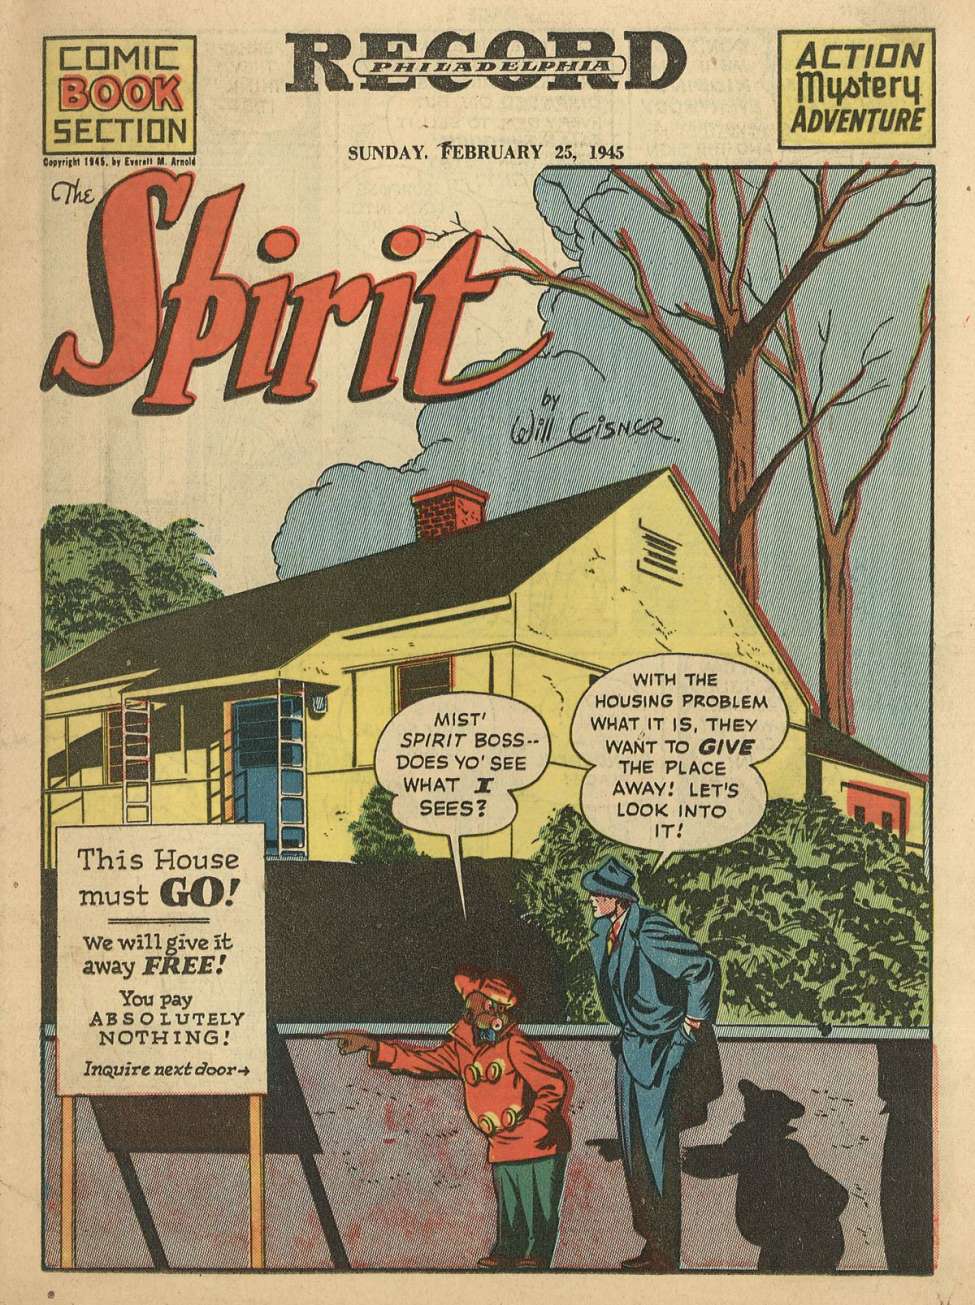 Comic Book Cover For The Spirit (1945-02-25) - Philadelphia Record